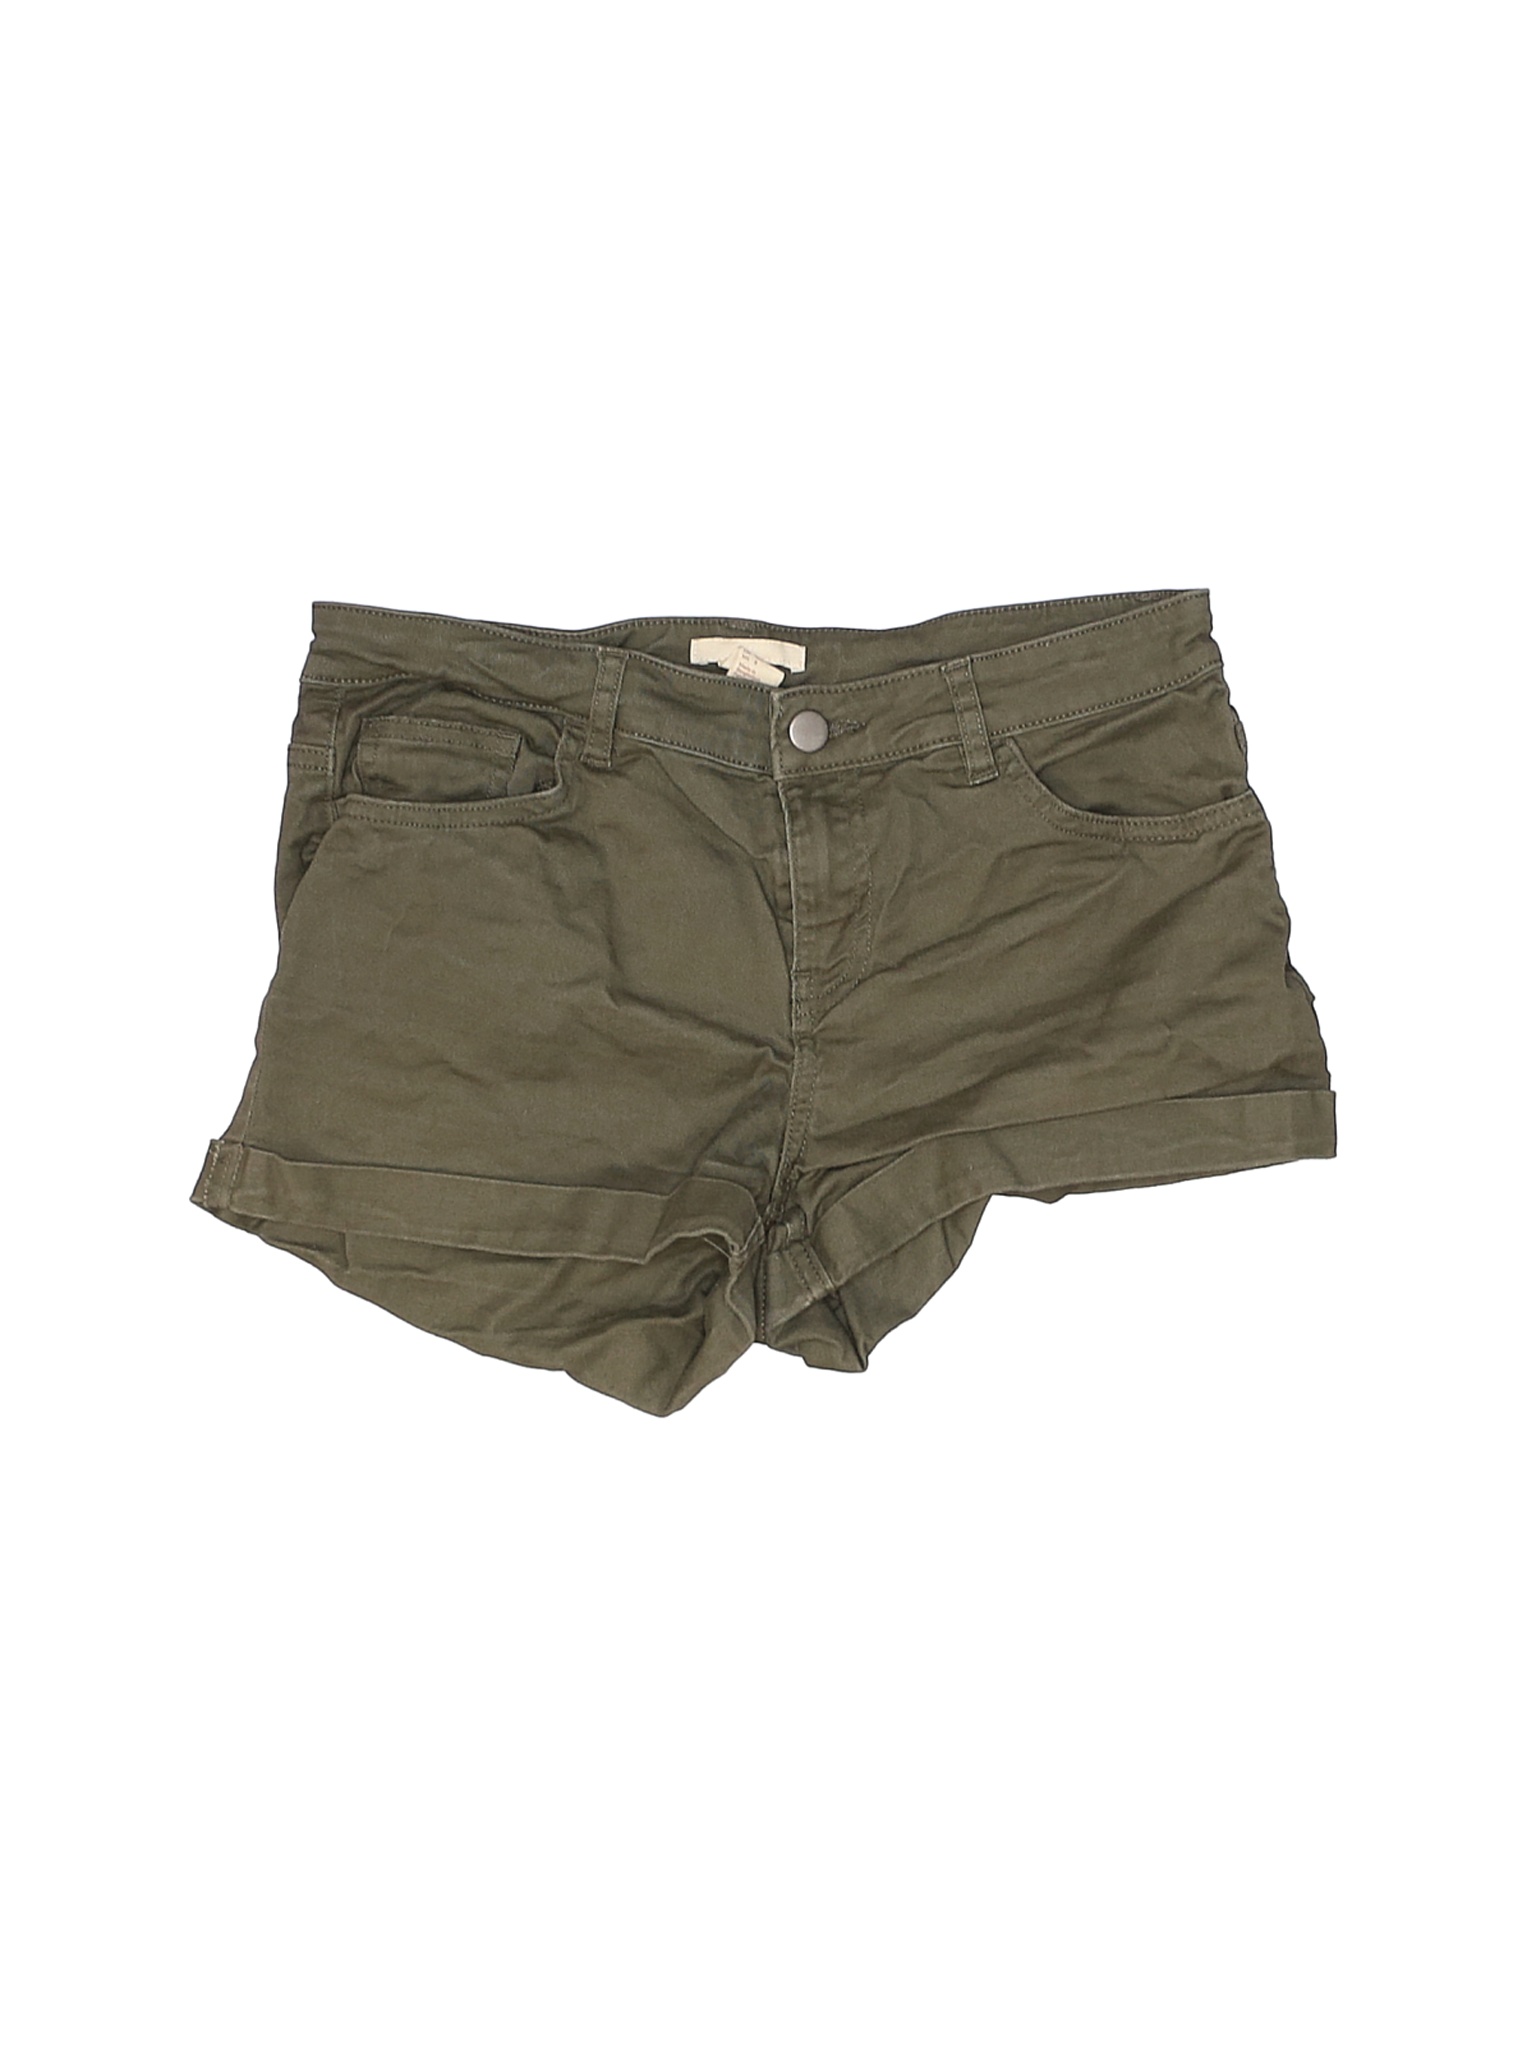 H&M Women Green Shorts 8 | eBay